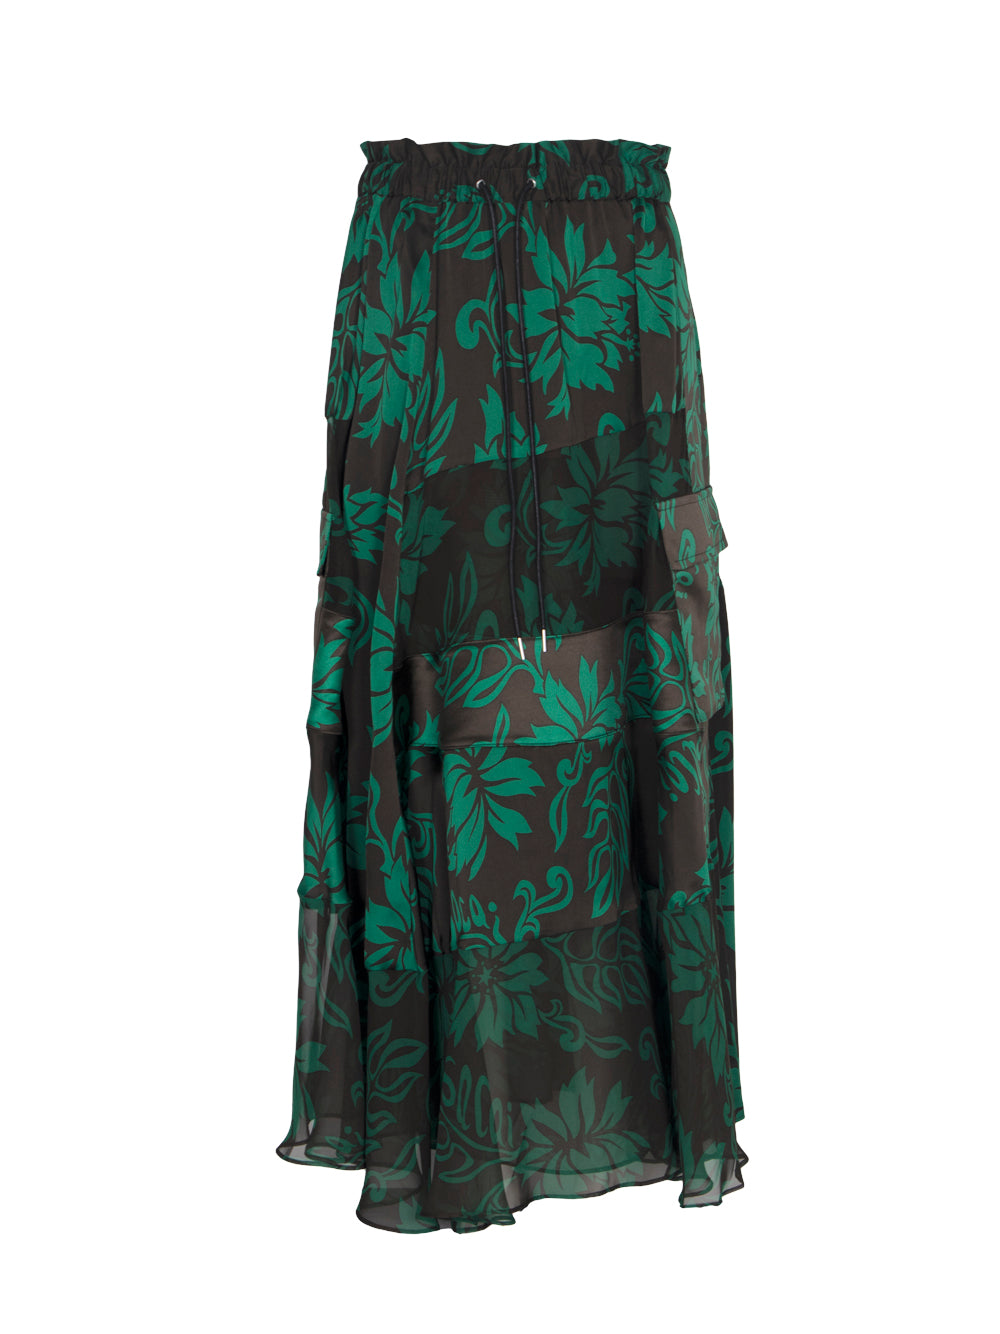 Floral Print Skirt (Green)